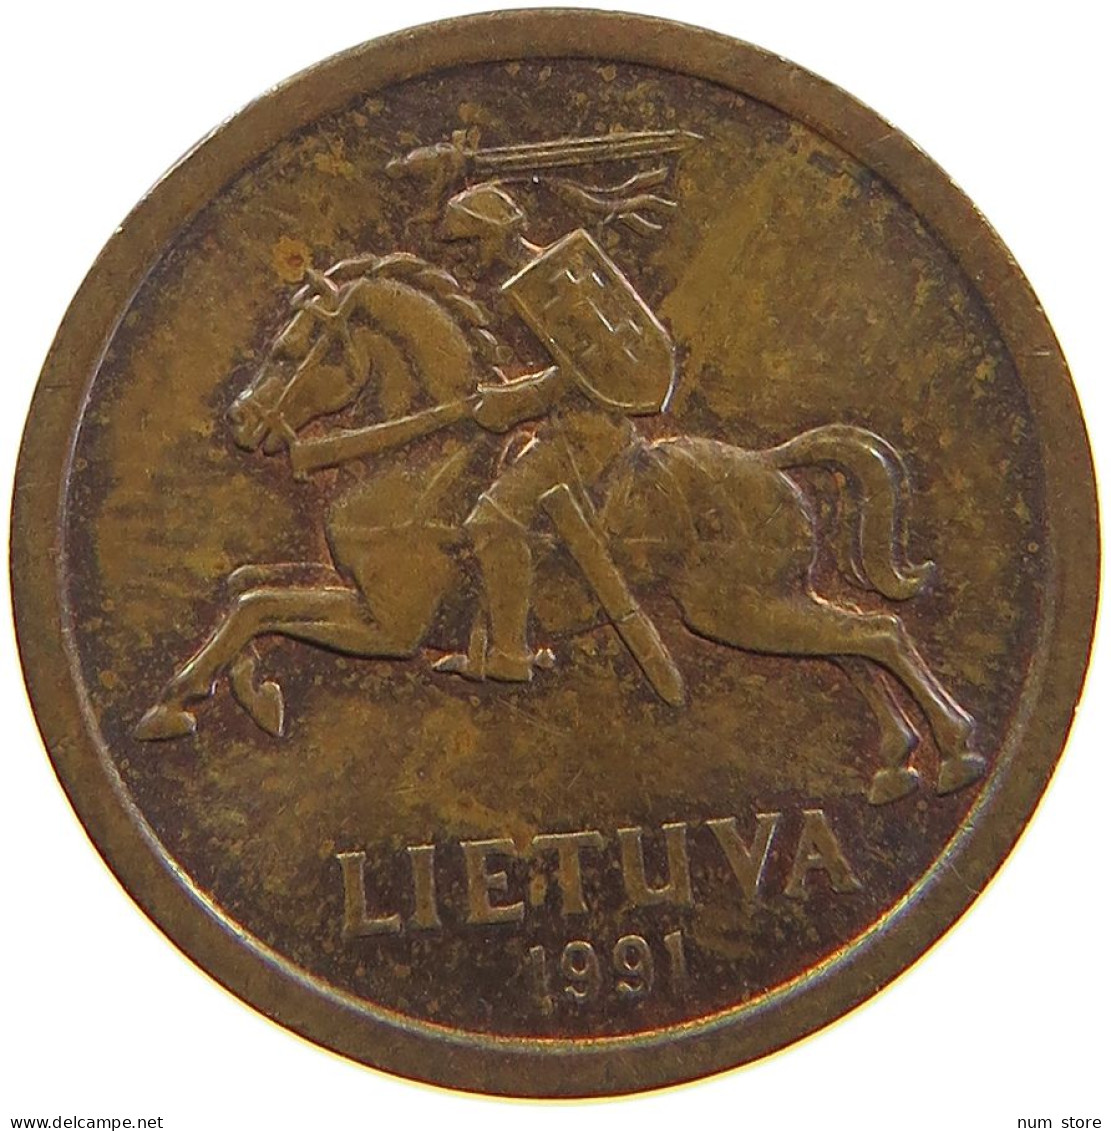 LITHUANIA 10 CENTU 1991 #s105 0615 - Lituania